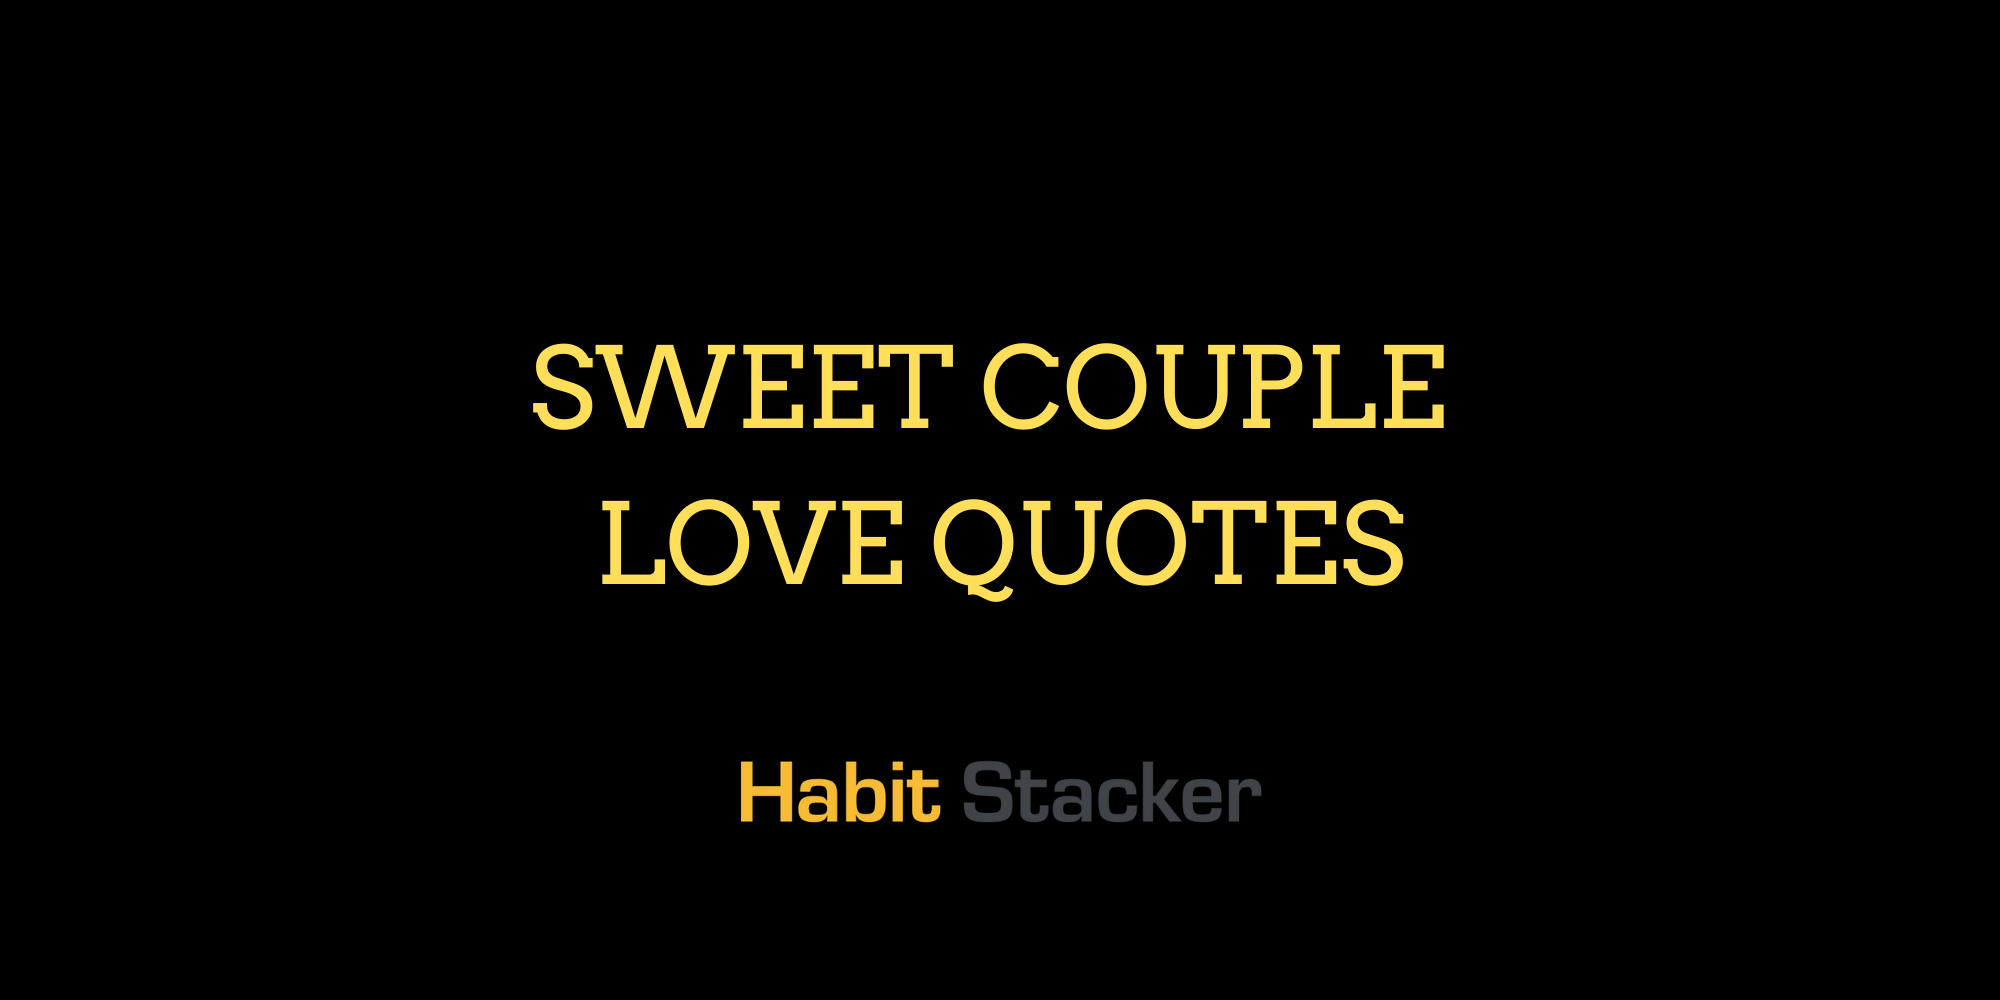 34 Sweet Couple Love Quotes - Habit Stacker